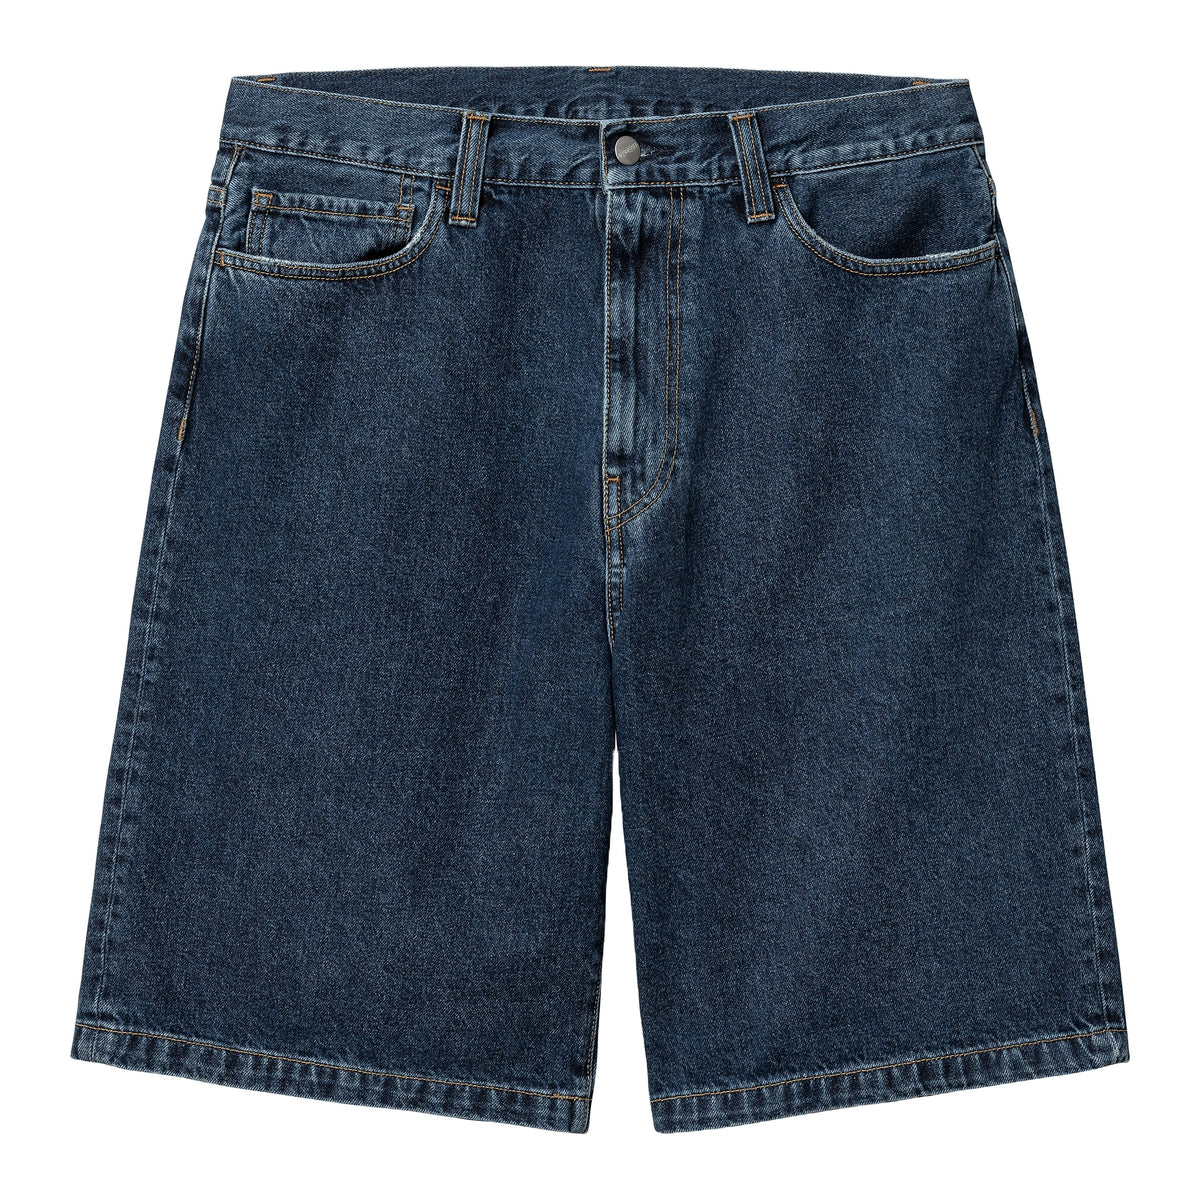 Carhartt Wip Men's Shorts Landon Blue